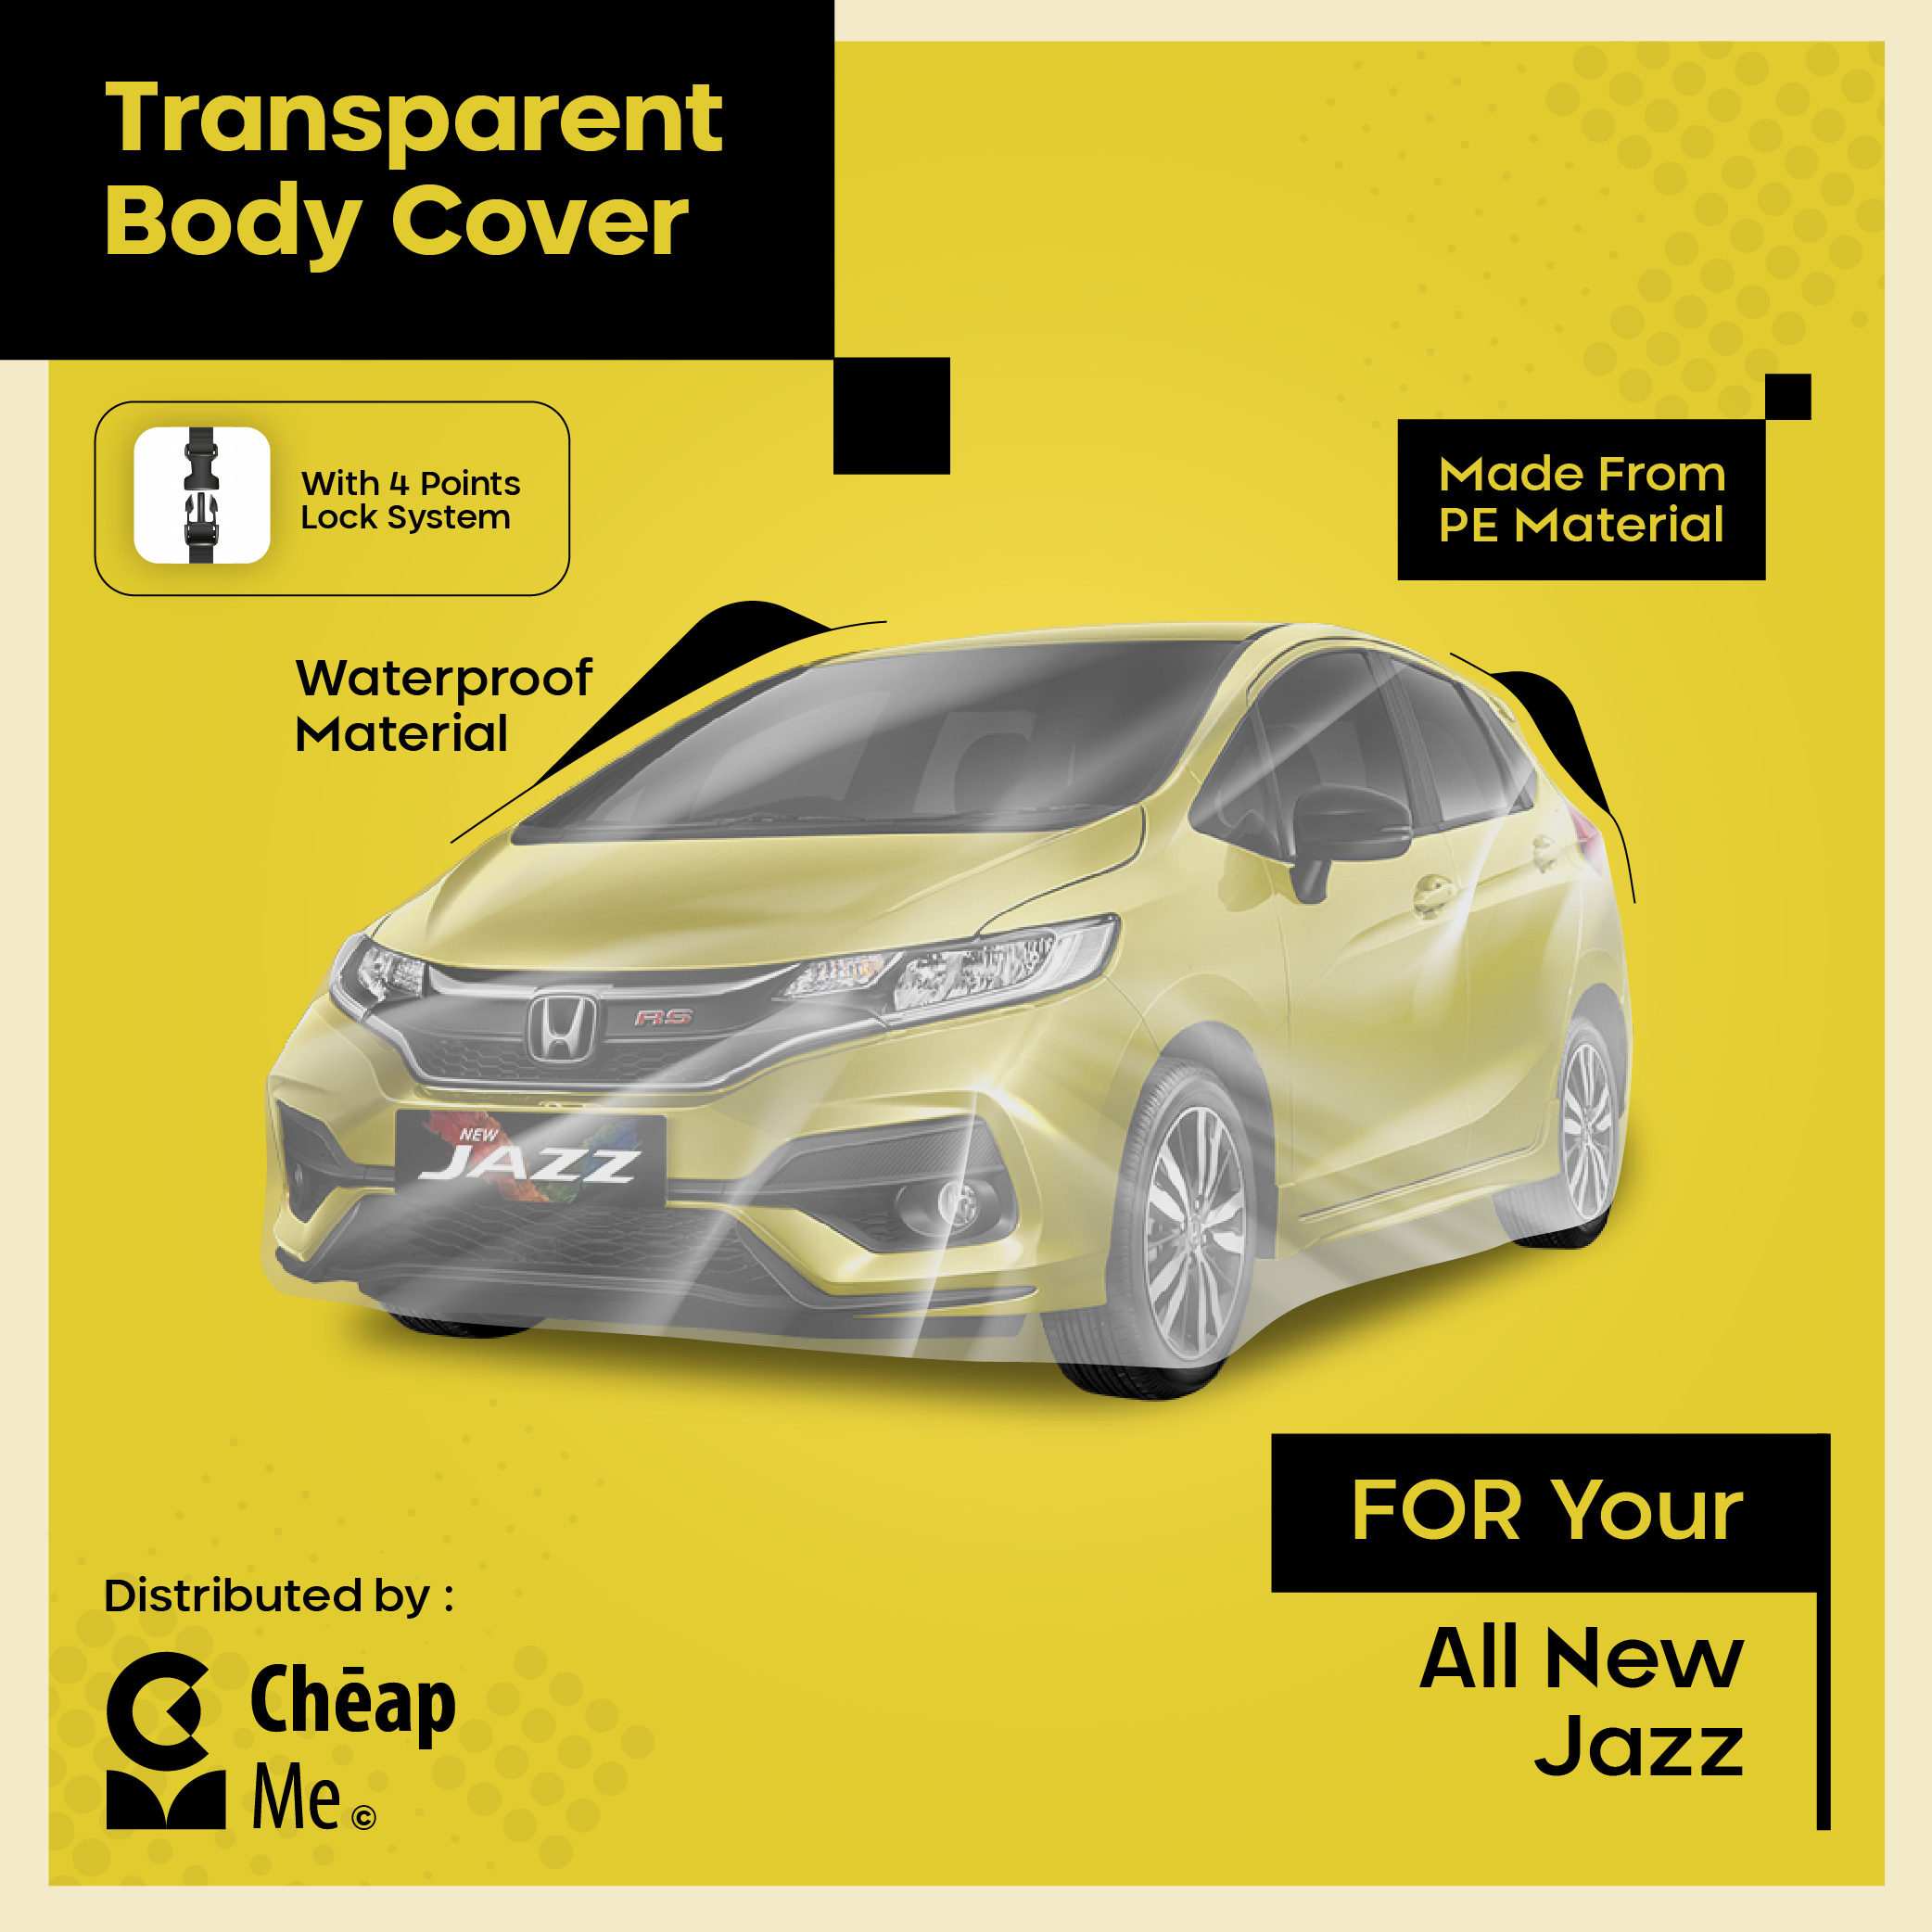 Sarung Mobil All New Jazz Cover Mobil Murah Body Cover Transparant TEBAL Car Cover WATERPROOF New Jazz Baru